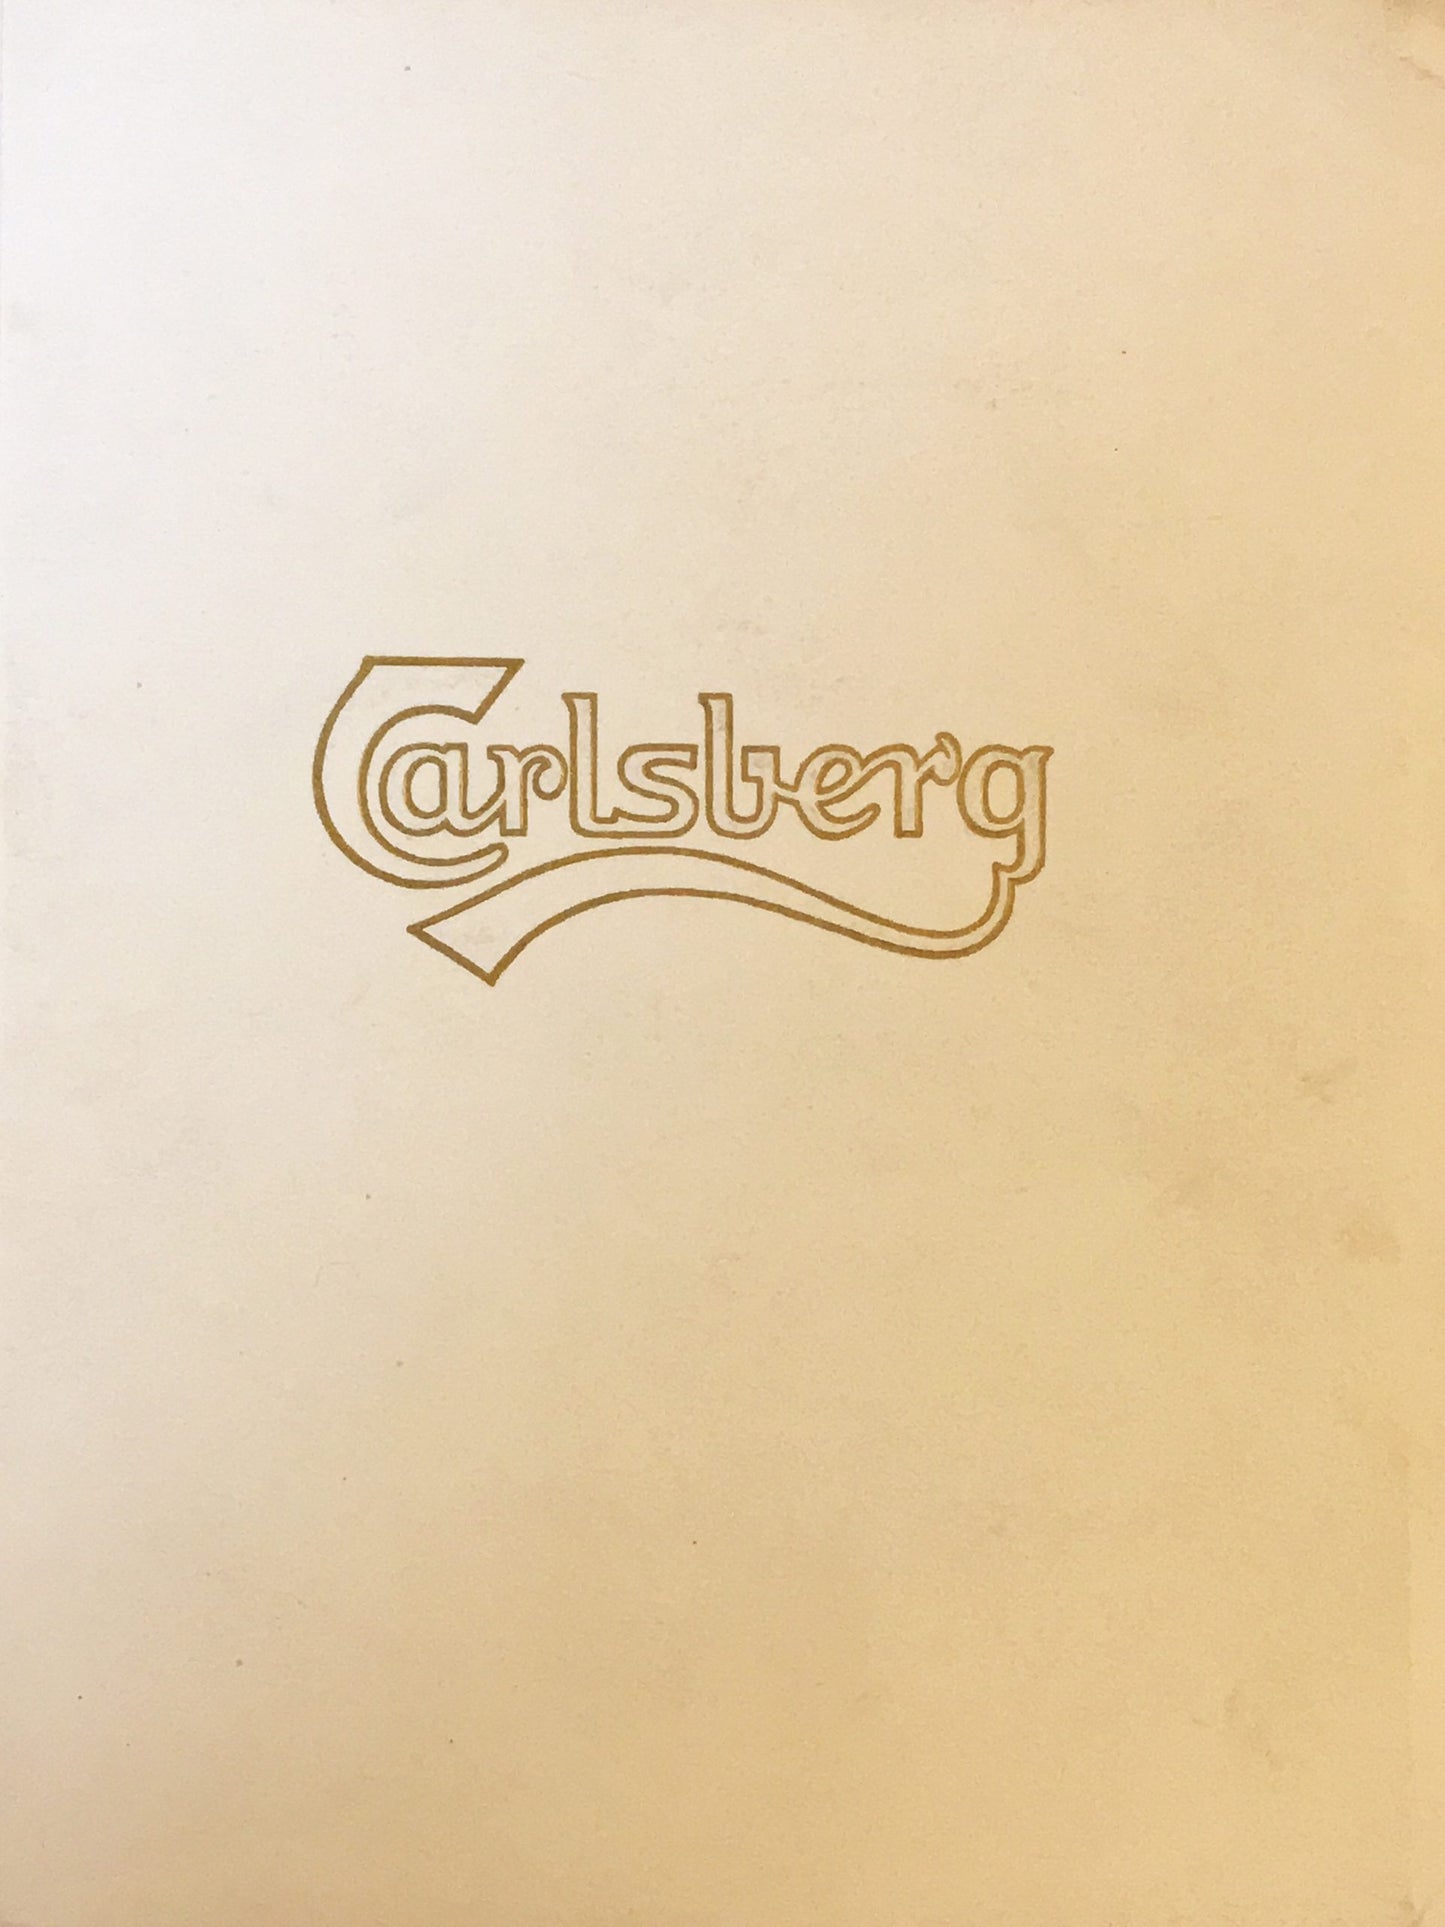 Carlsberg Bryggerierne